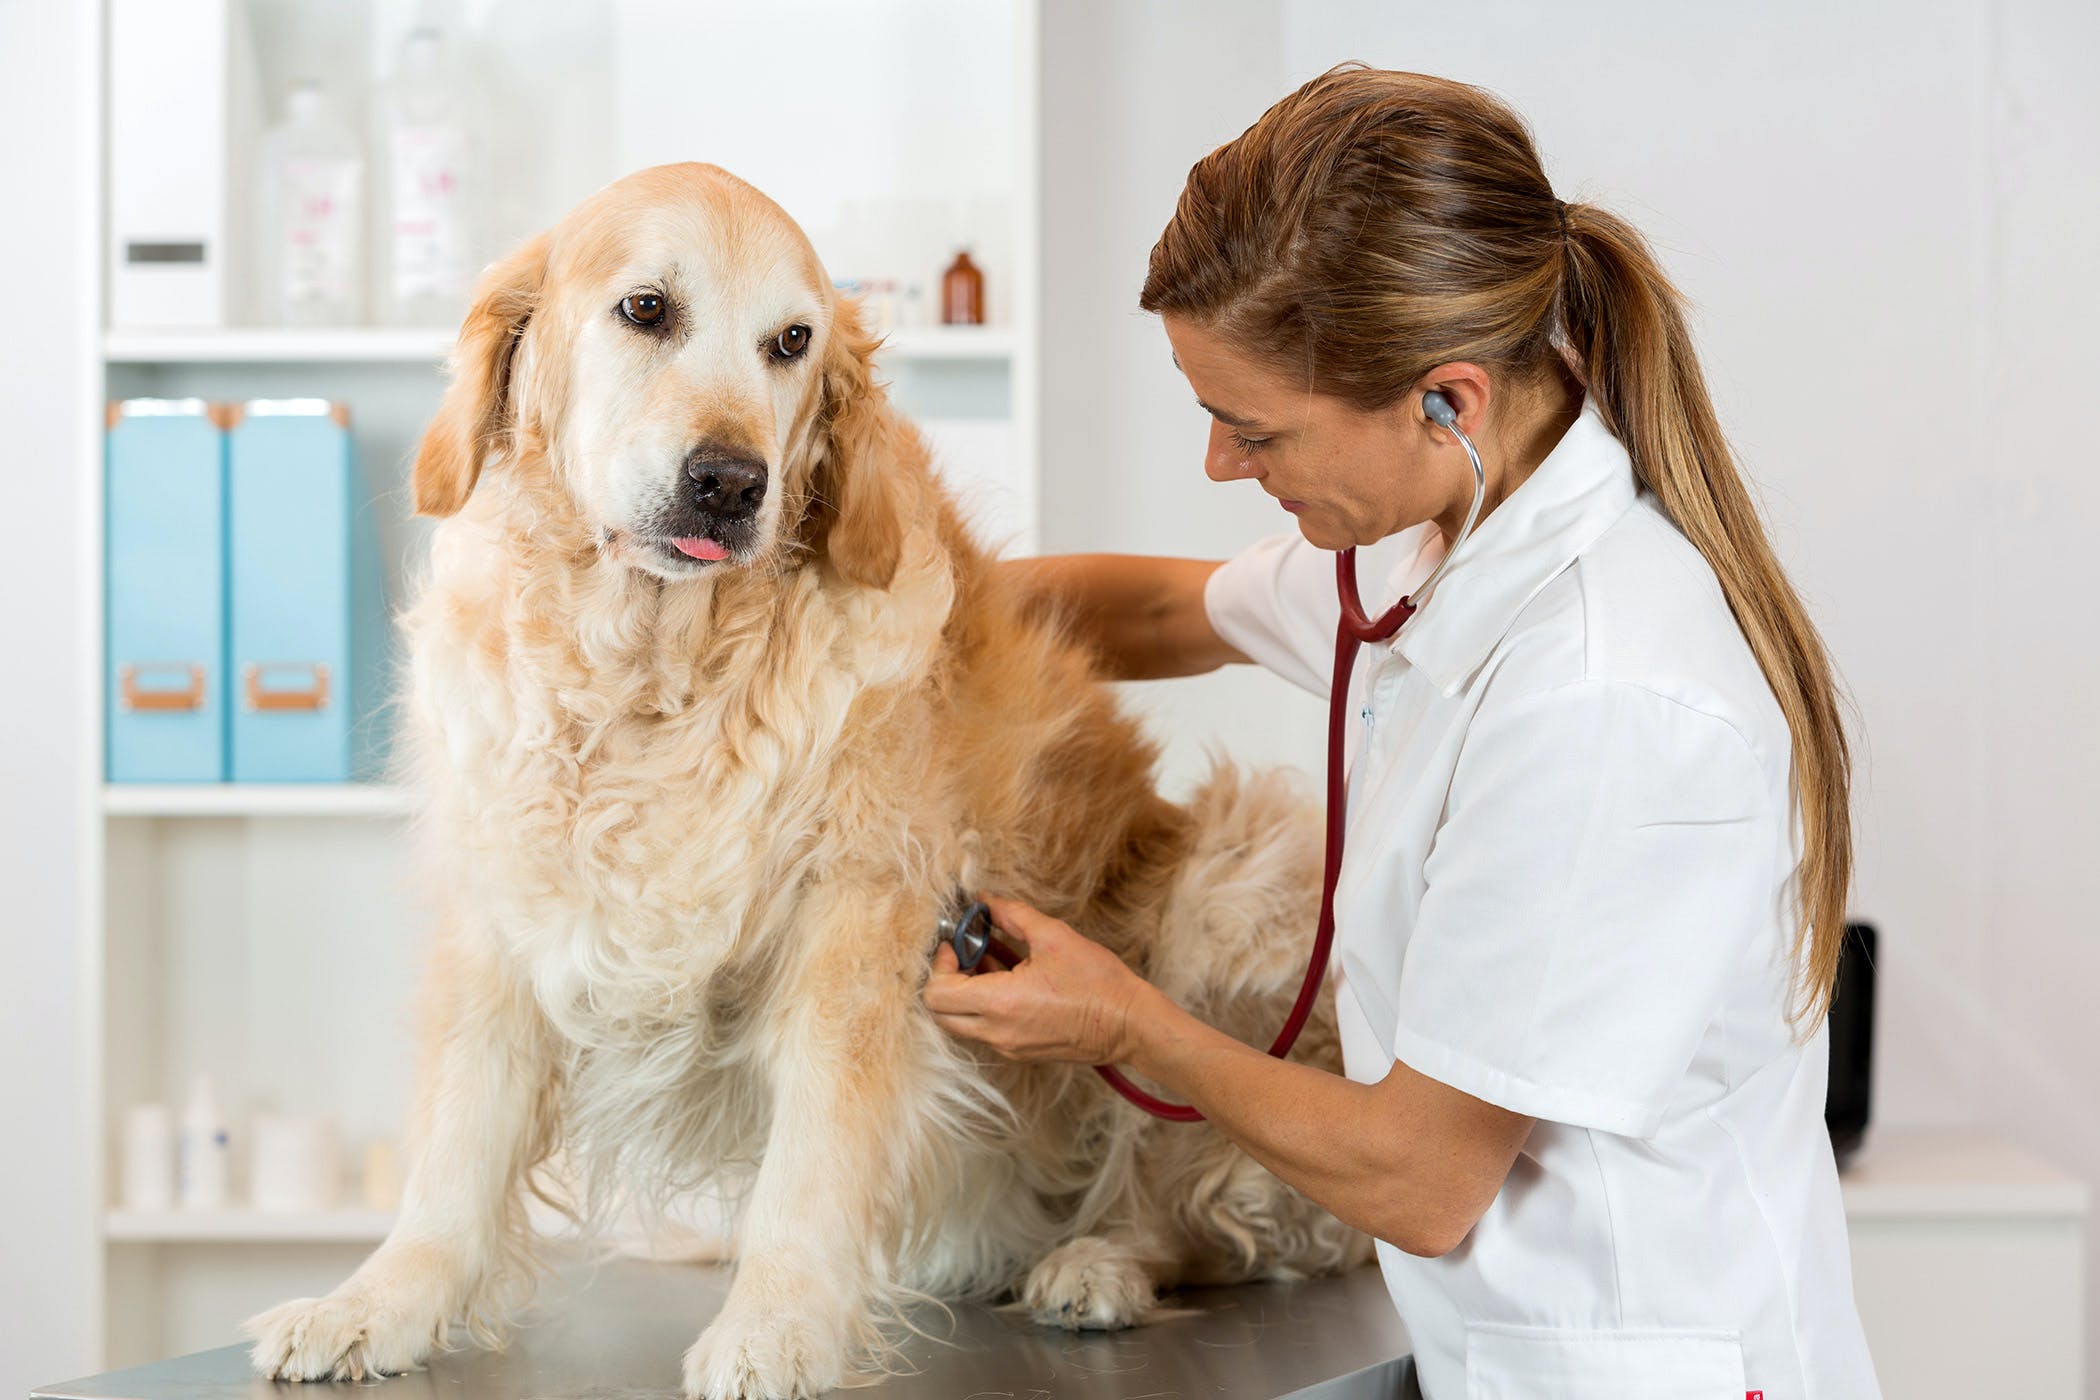   Golden Retriever examined by a veterinarian